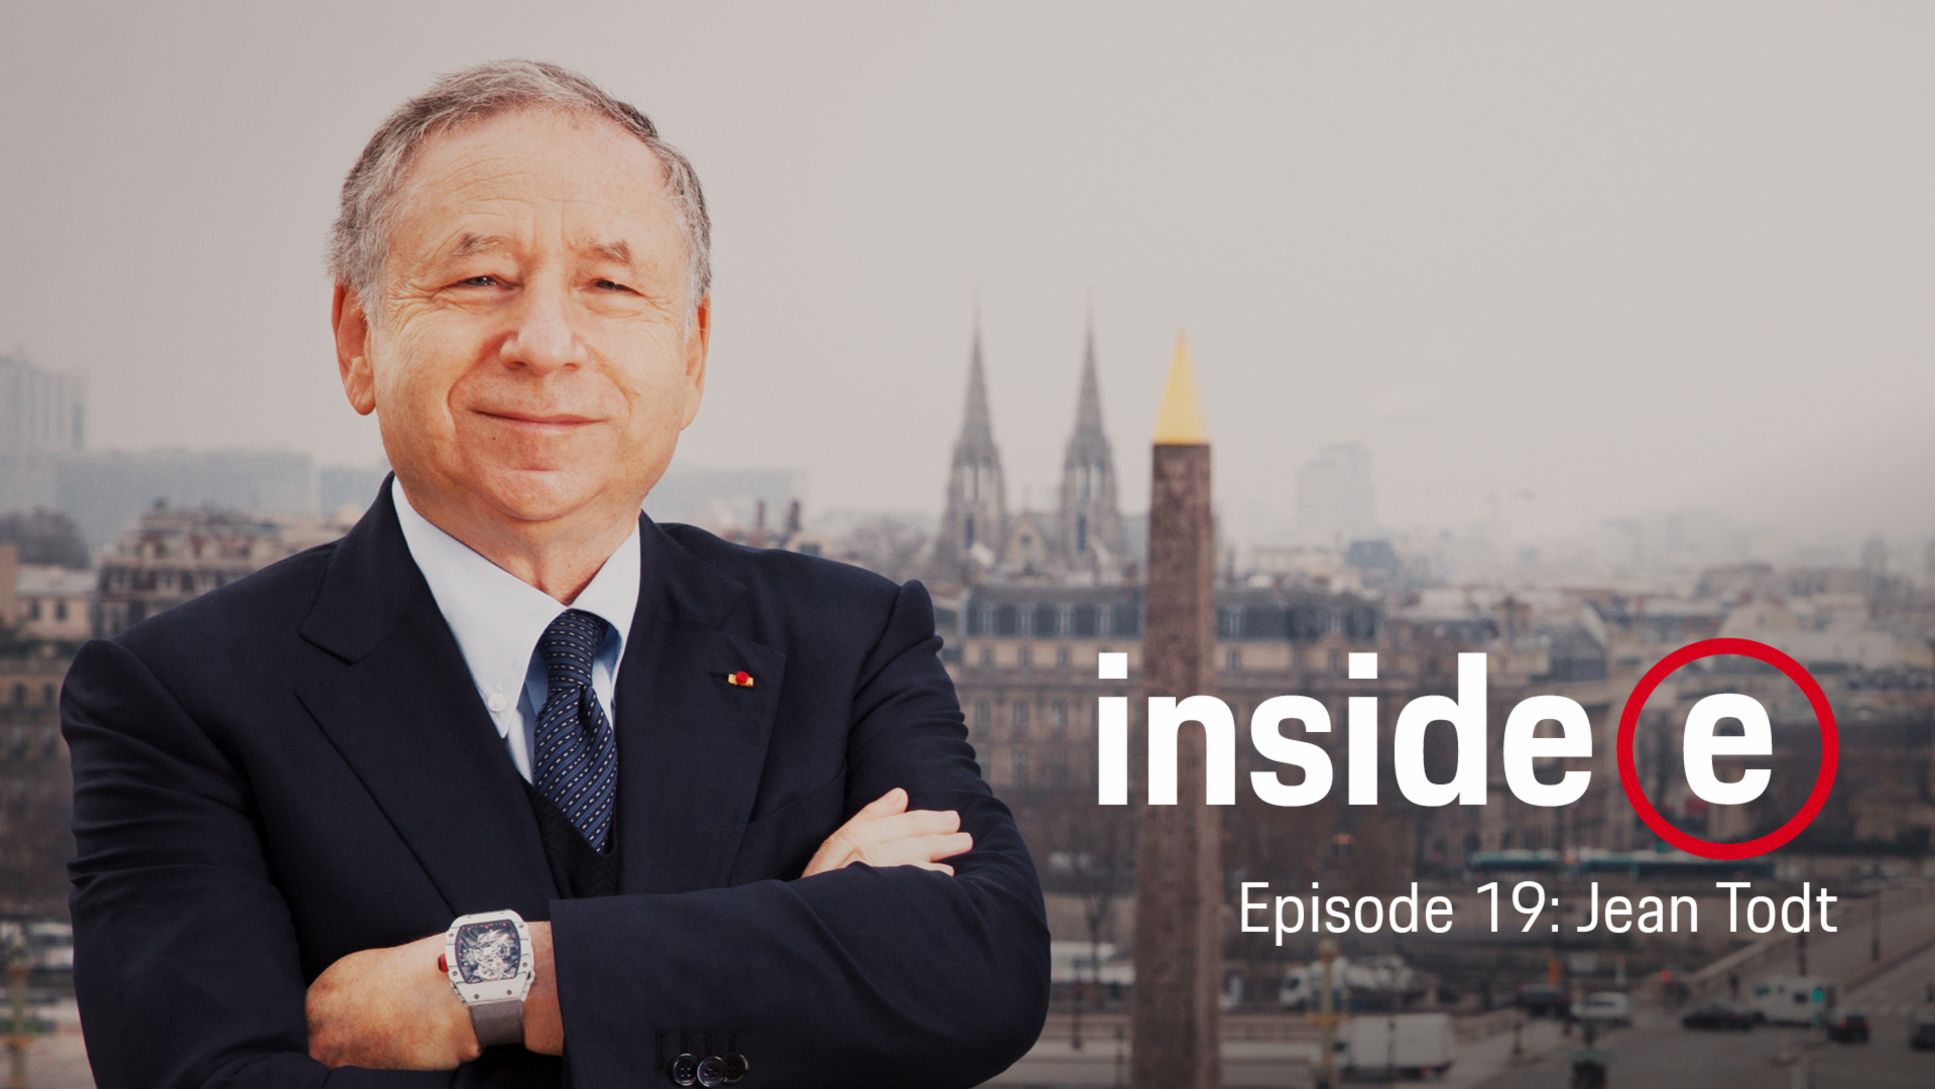 Jean Todt, President of the FIA, “Inside E” podcast, 2021, Porsche AG